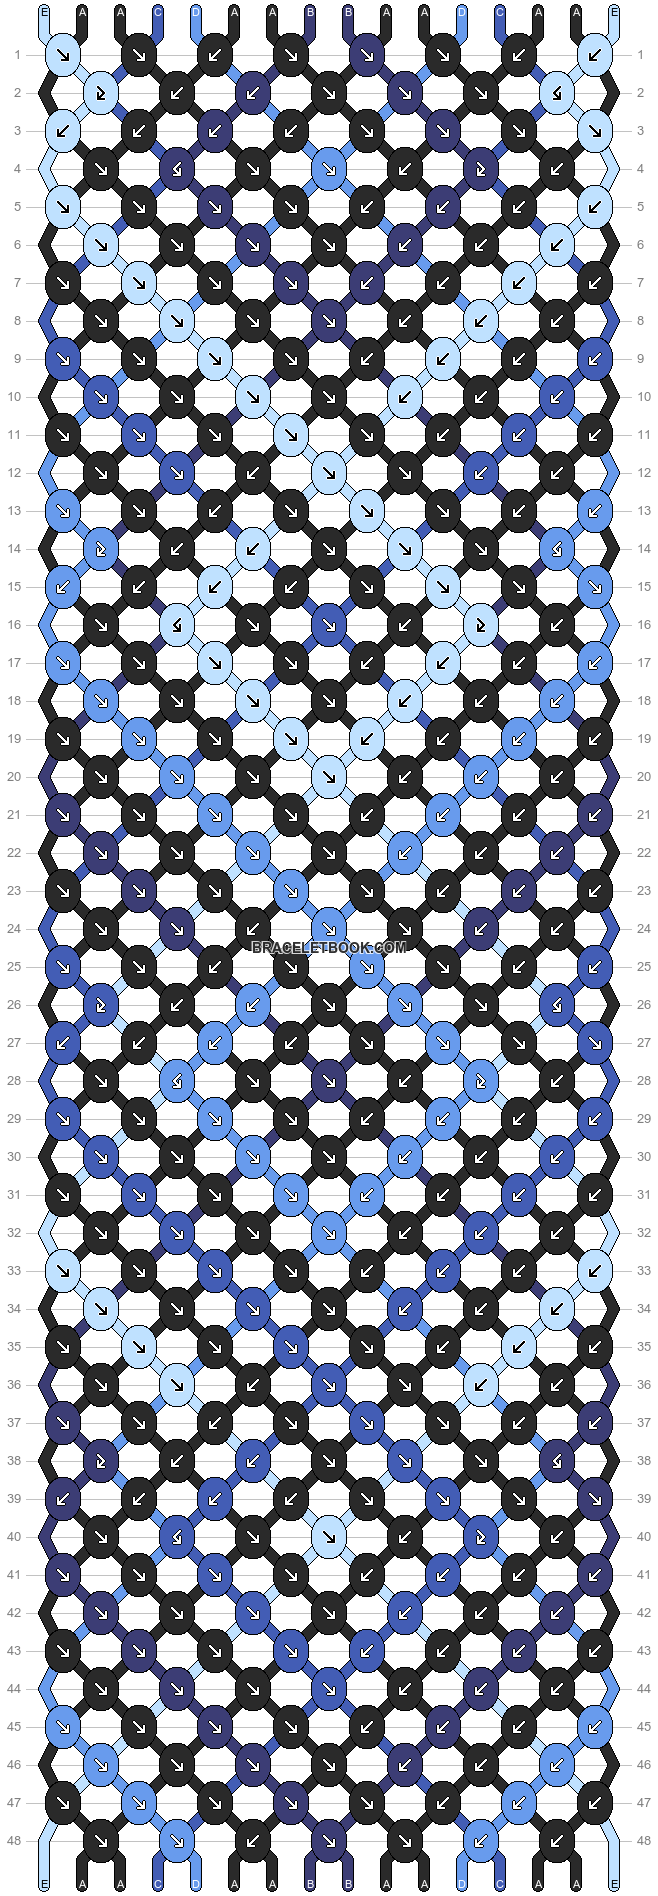 Normal pattern #128433 | BraceletBook